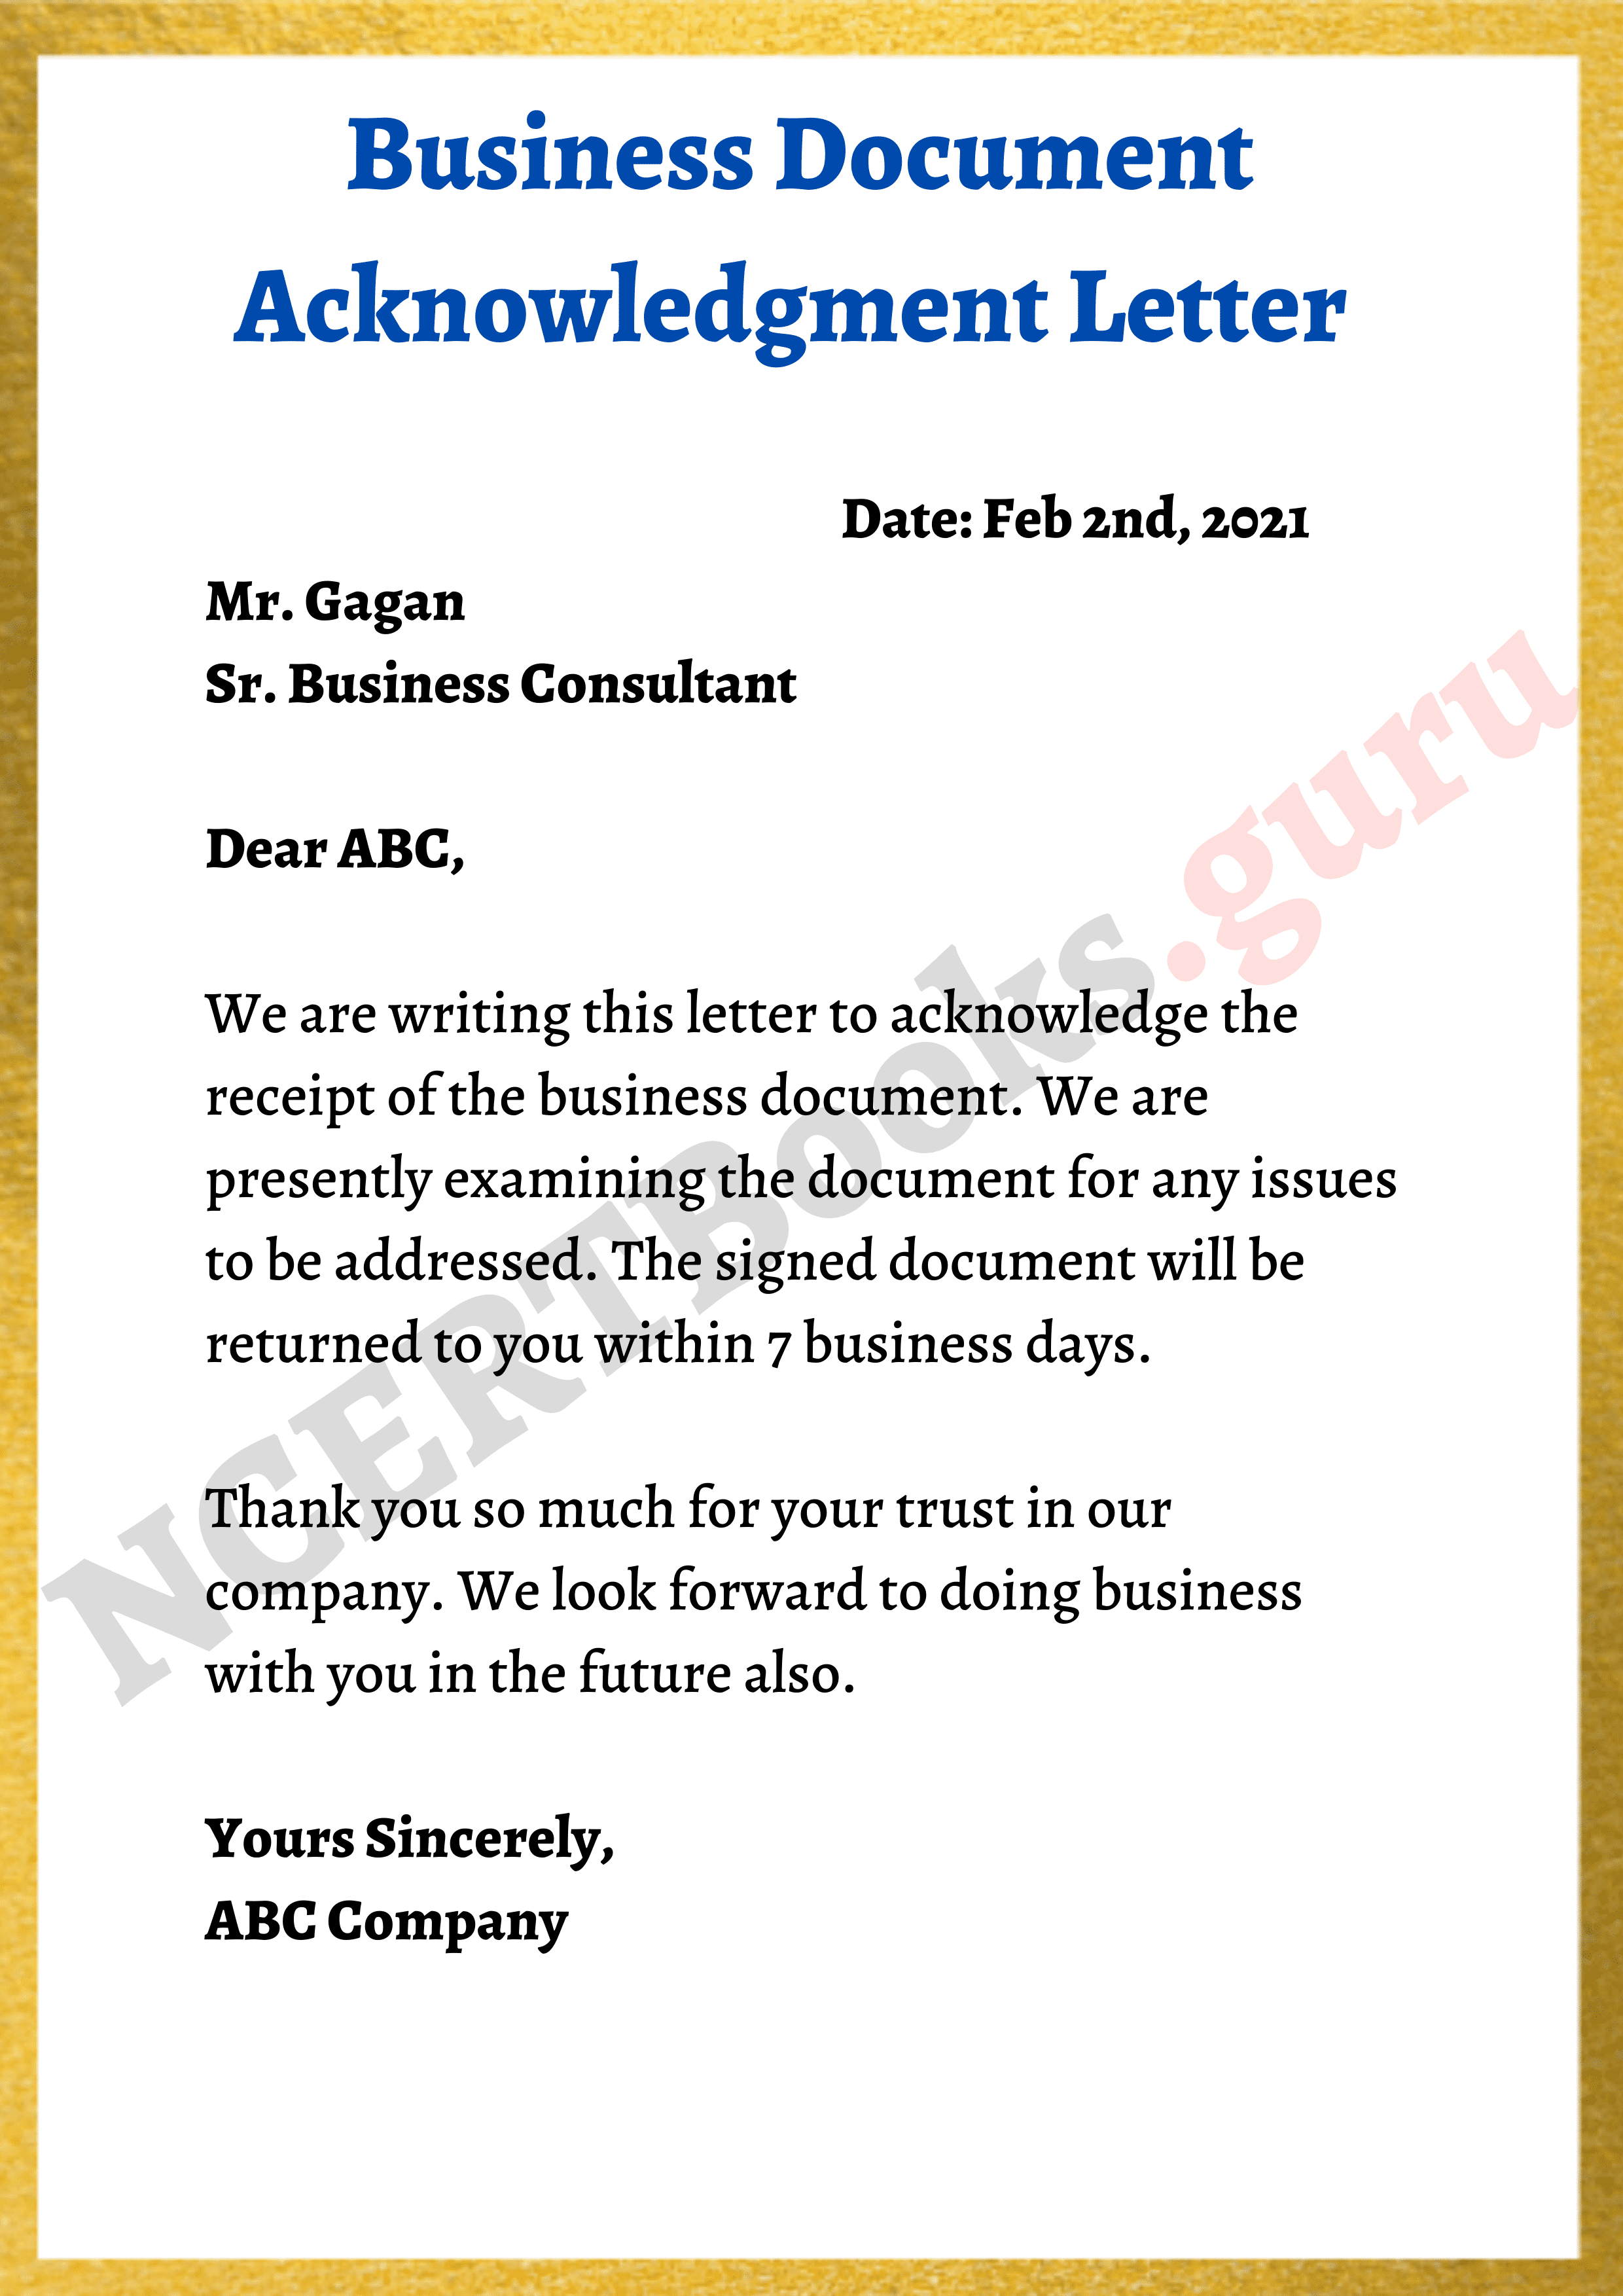 Business Document Acknowledgement Letter